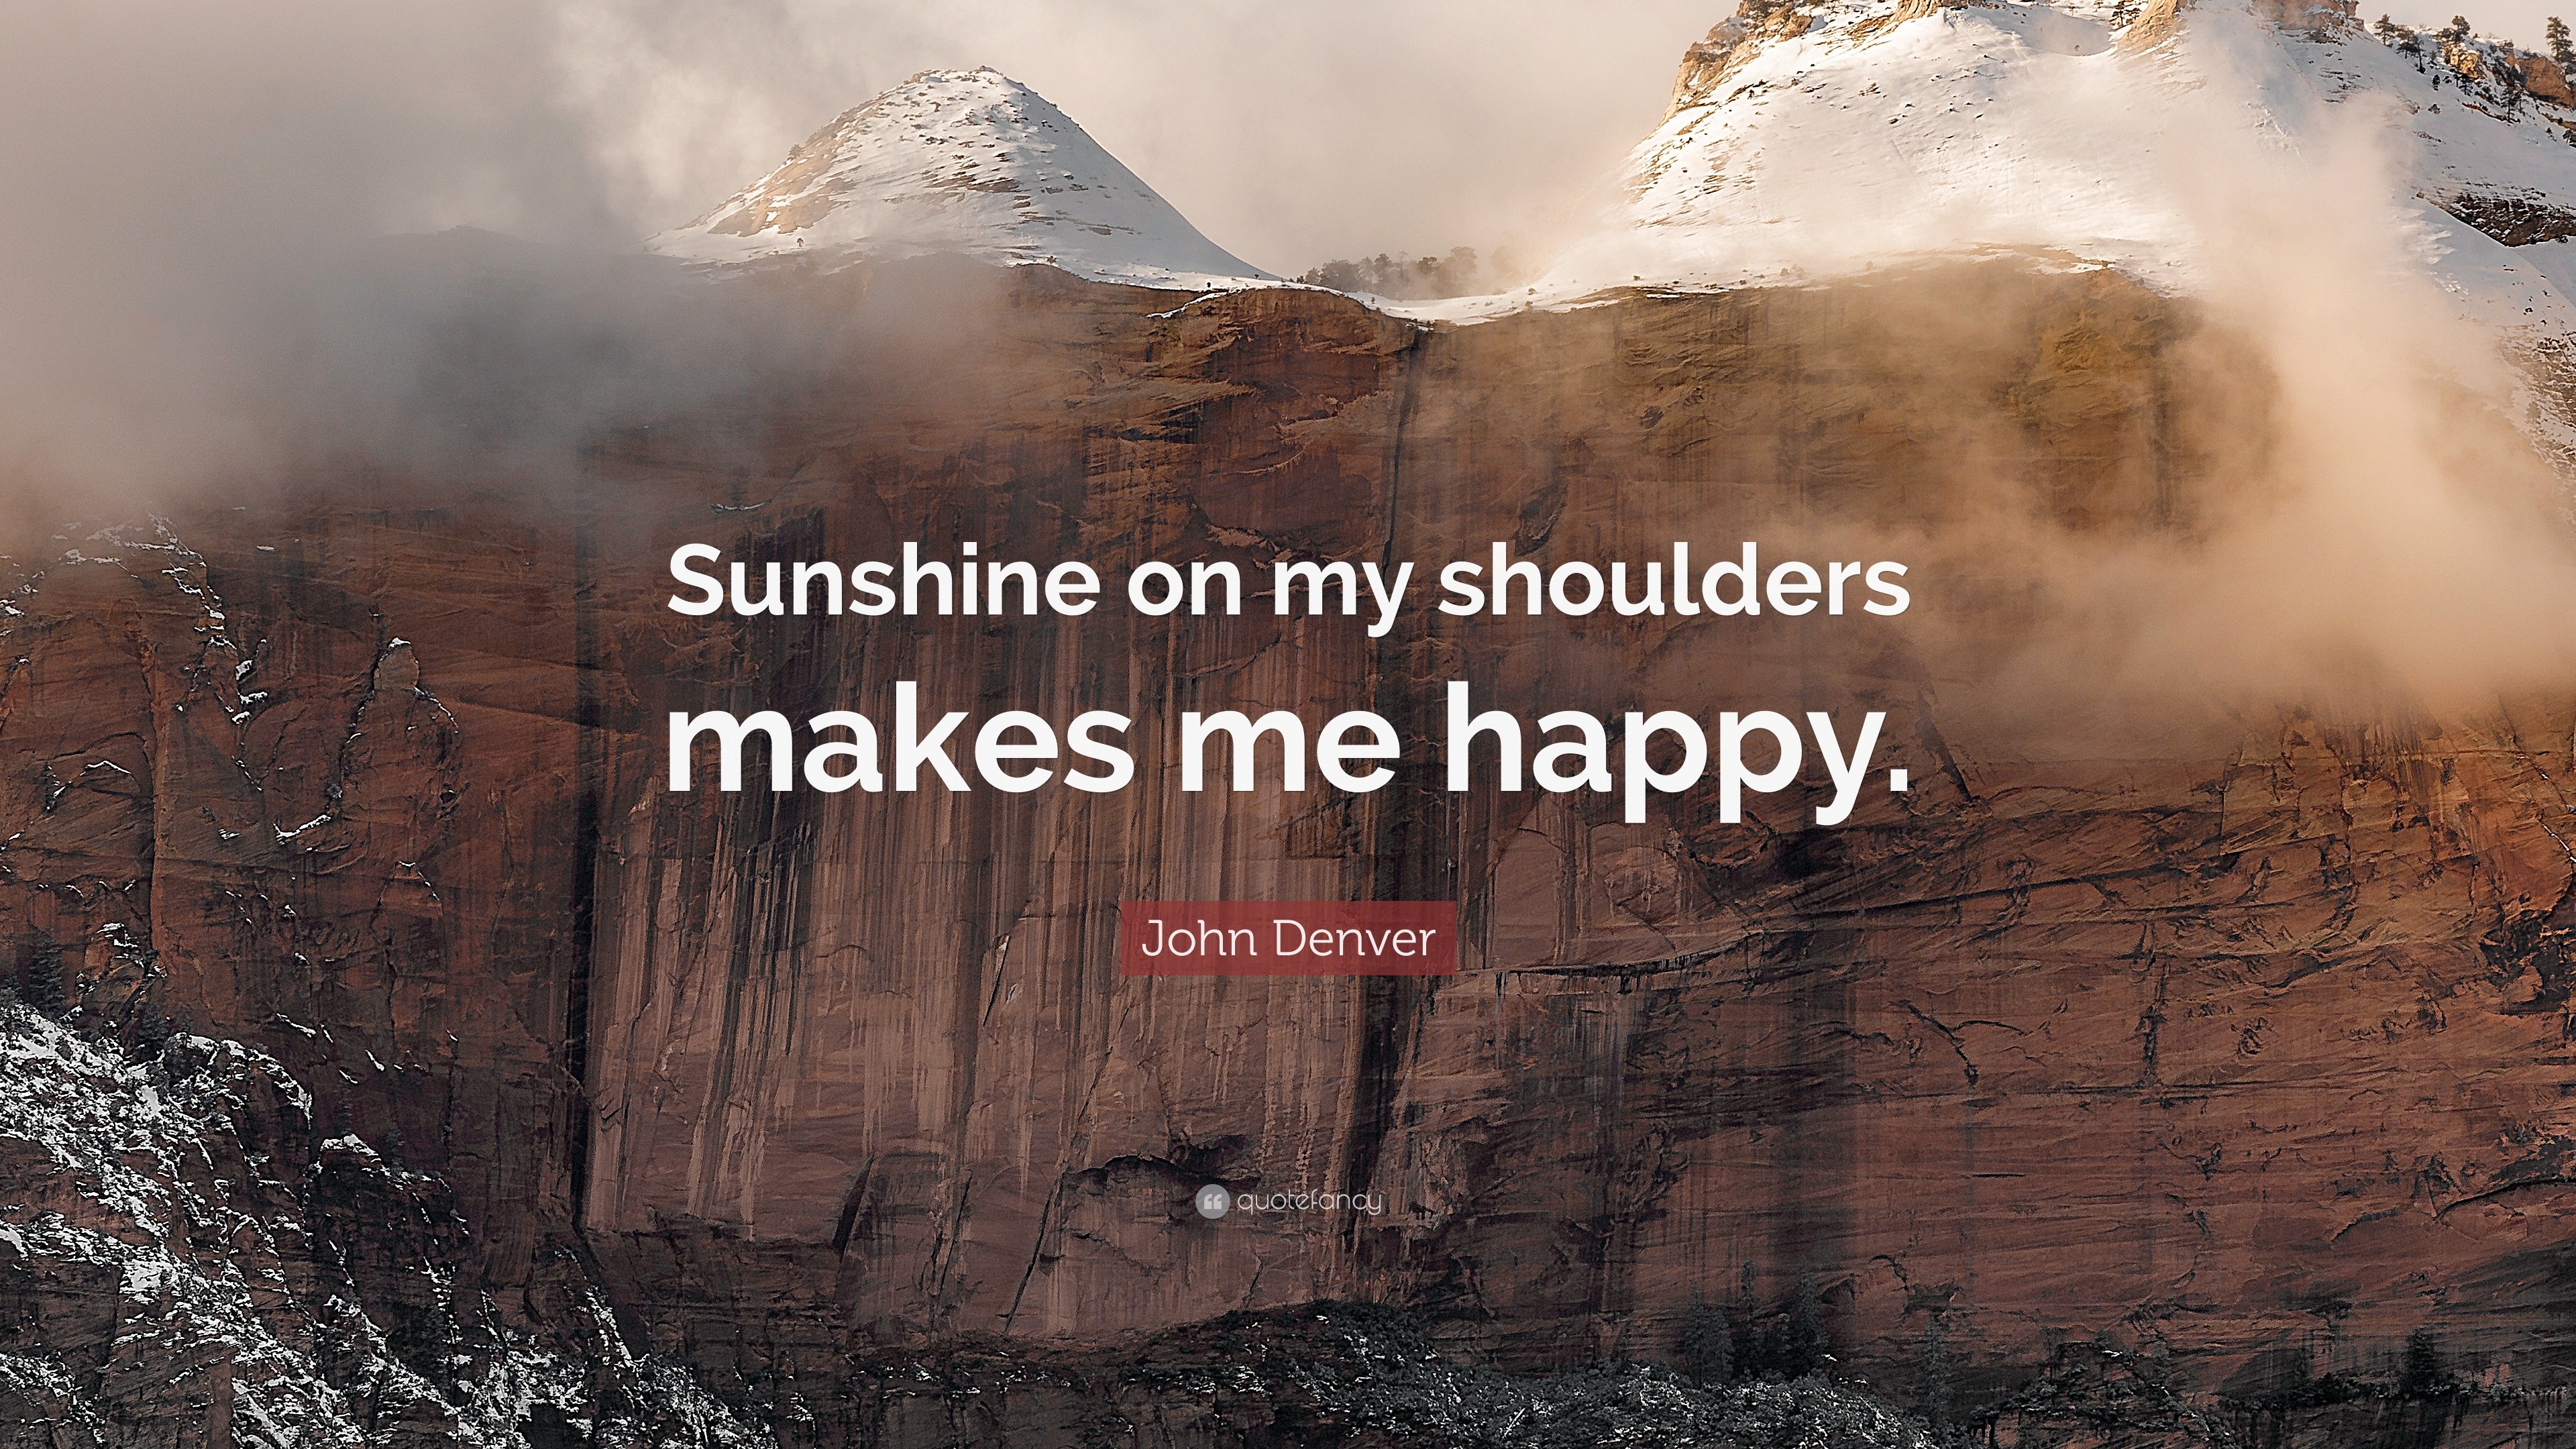 John Denver Quote “Sunshine on my shoulders makes me happy.” (10